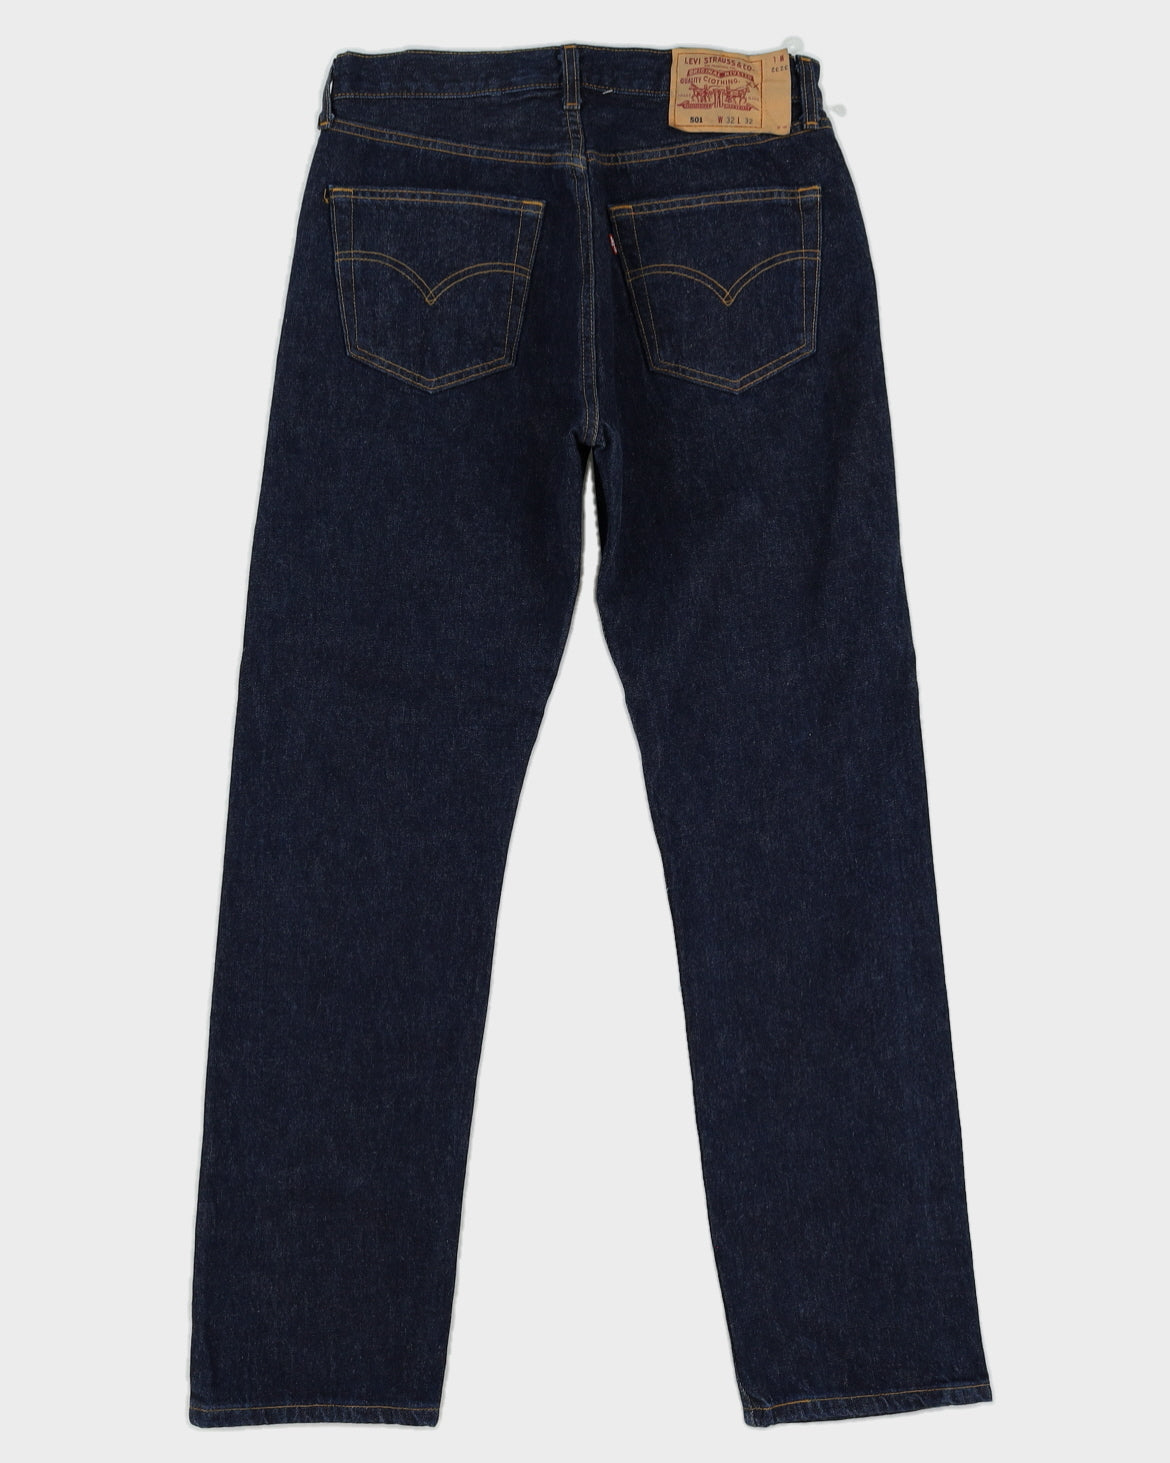 Vintage 90s Levi's 501 Dark Washed Blue Jeans - W32 L32